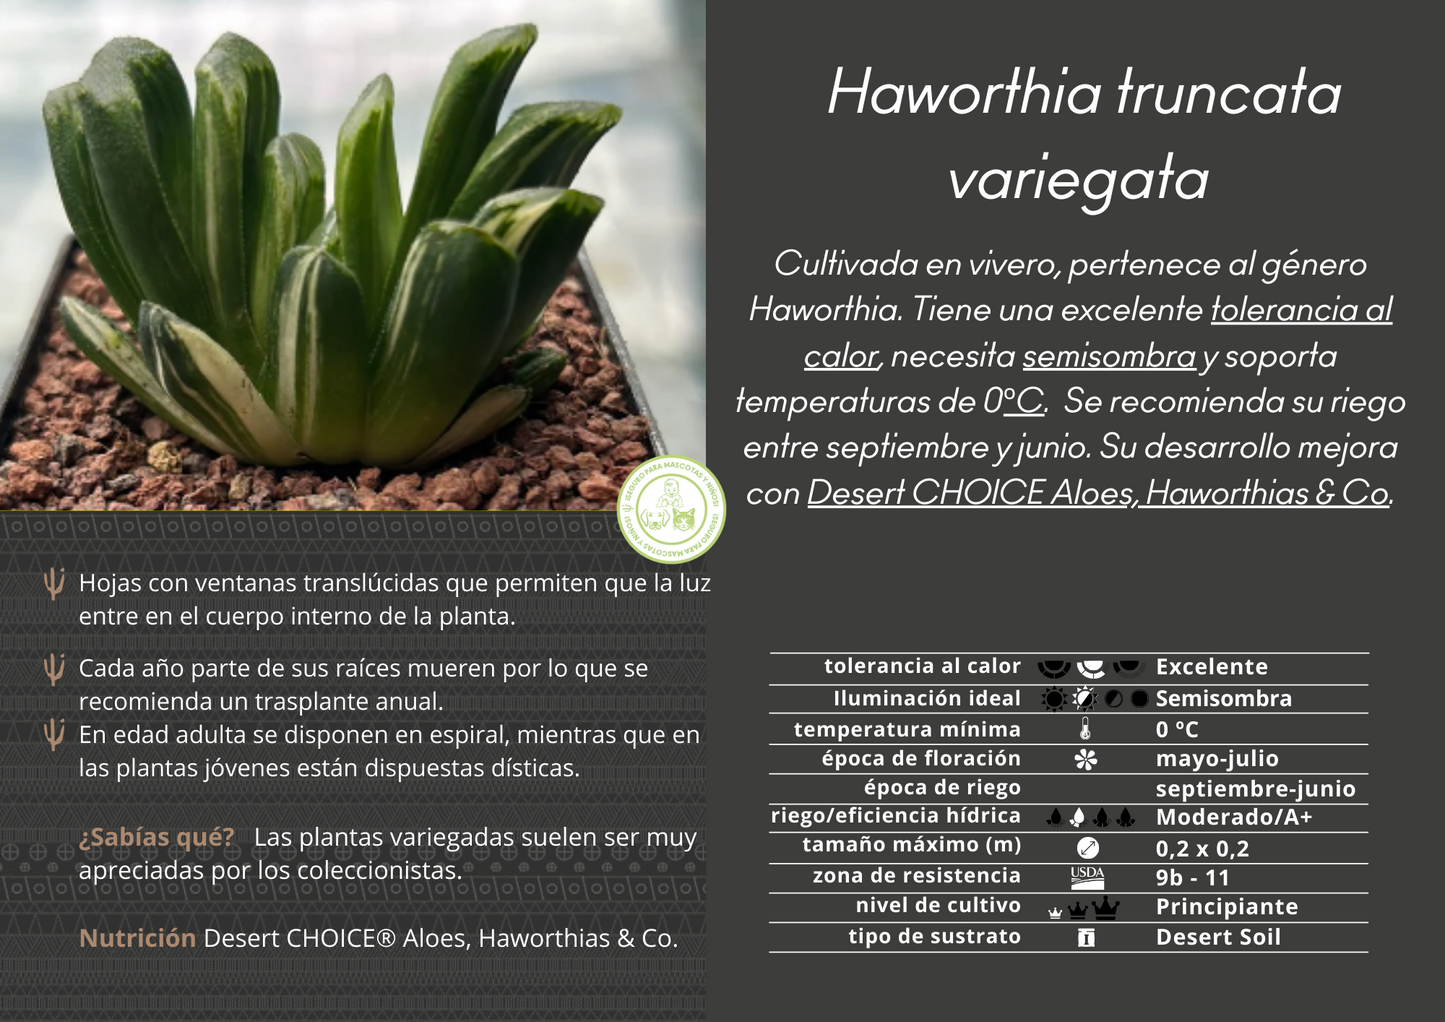 Haworthia truncata variegata